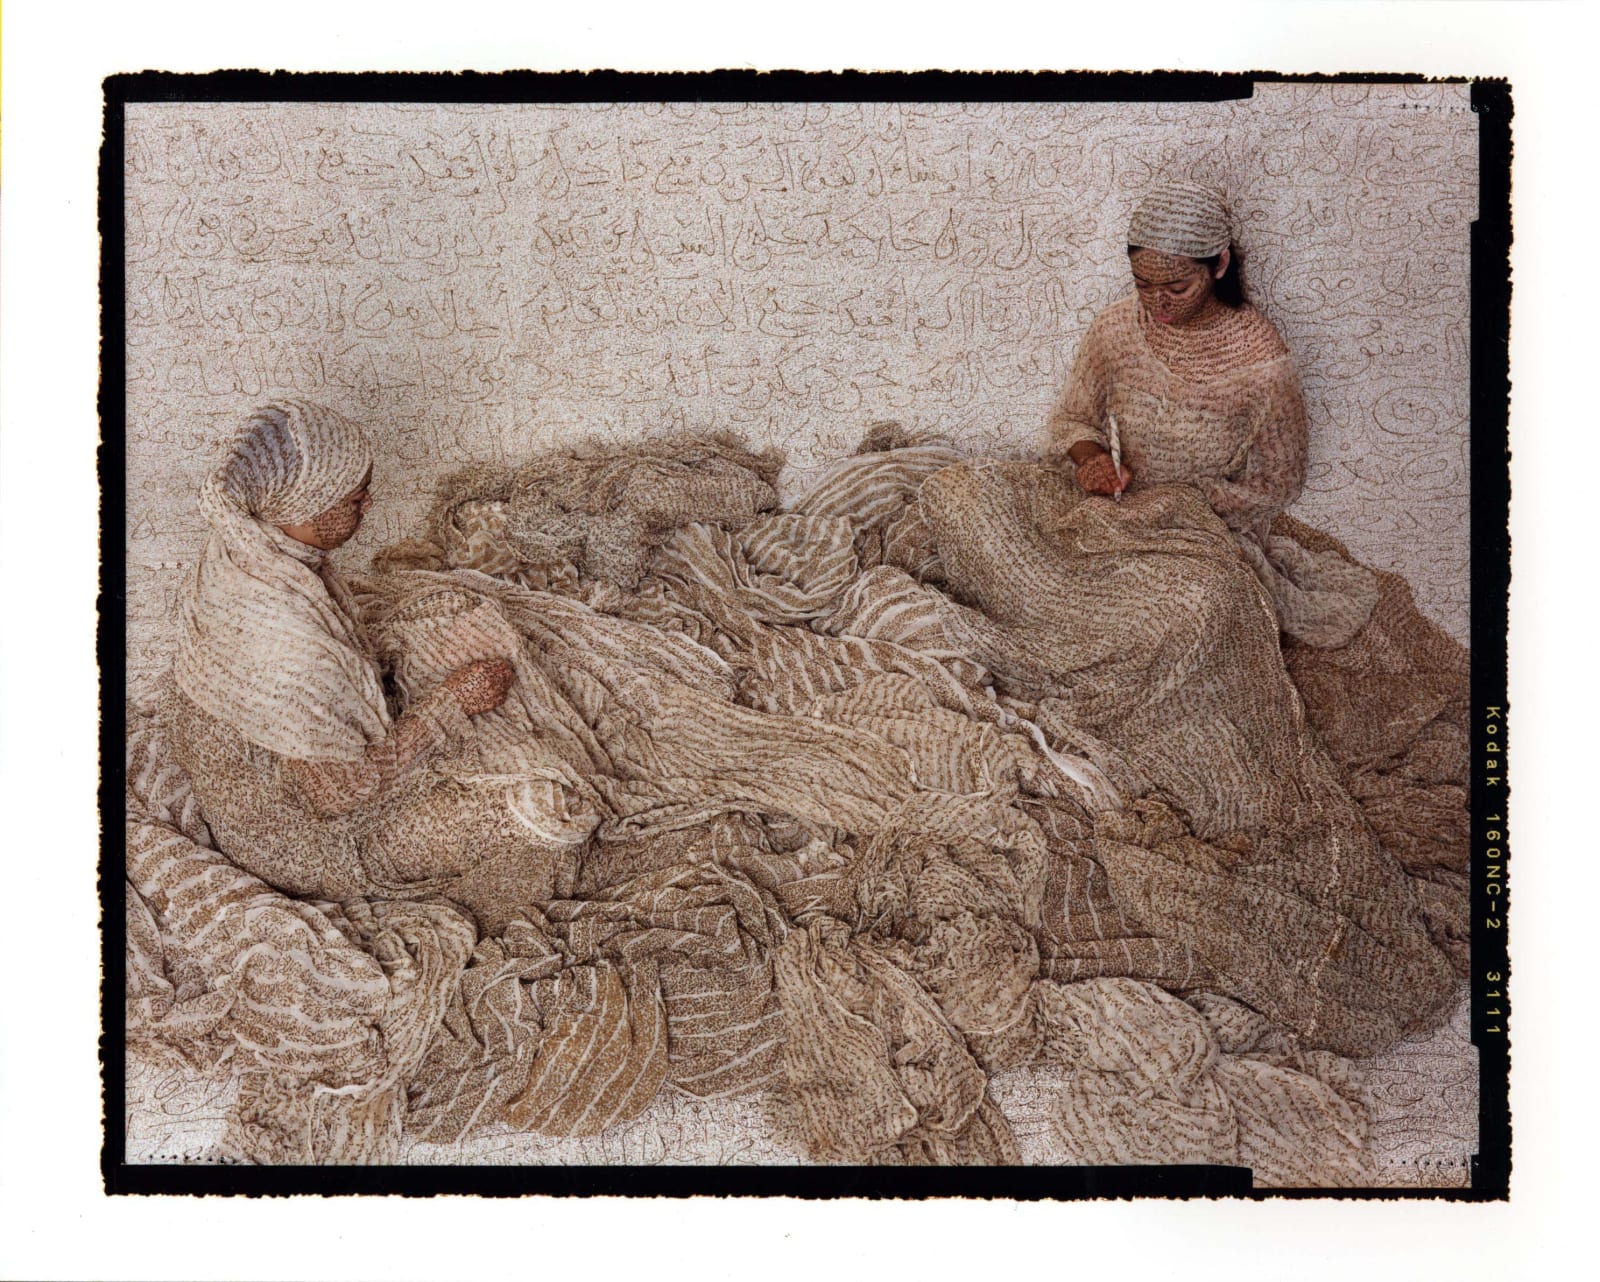 Lalla Essaydi Les Femmes du Maroc two women inscribing henna onto large pile of fabric